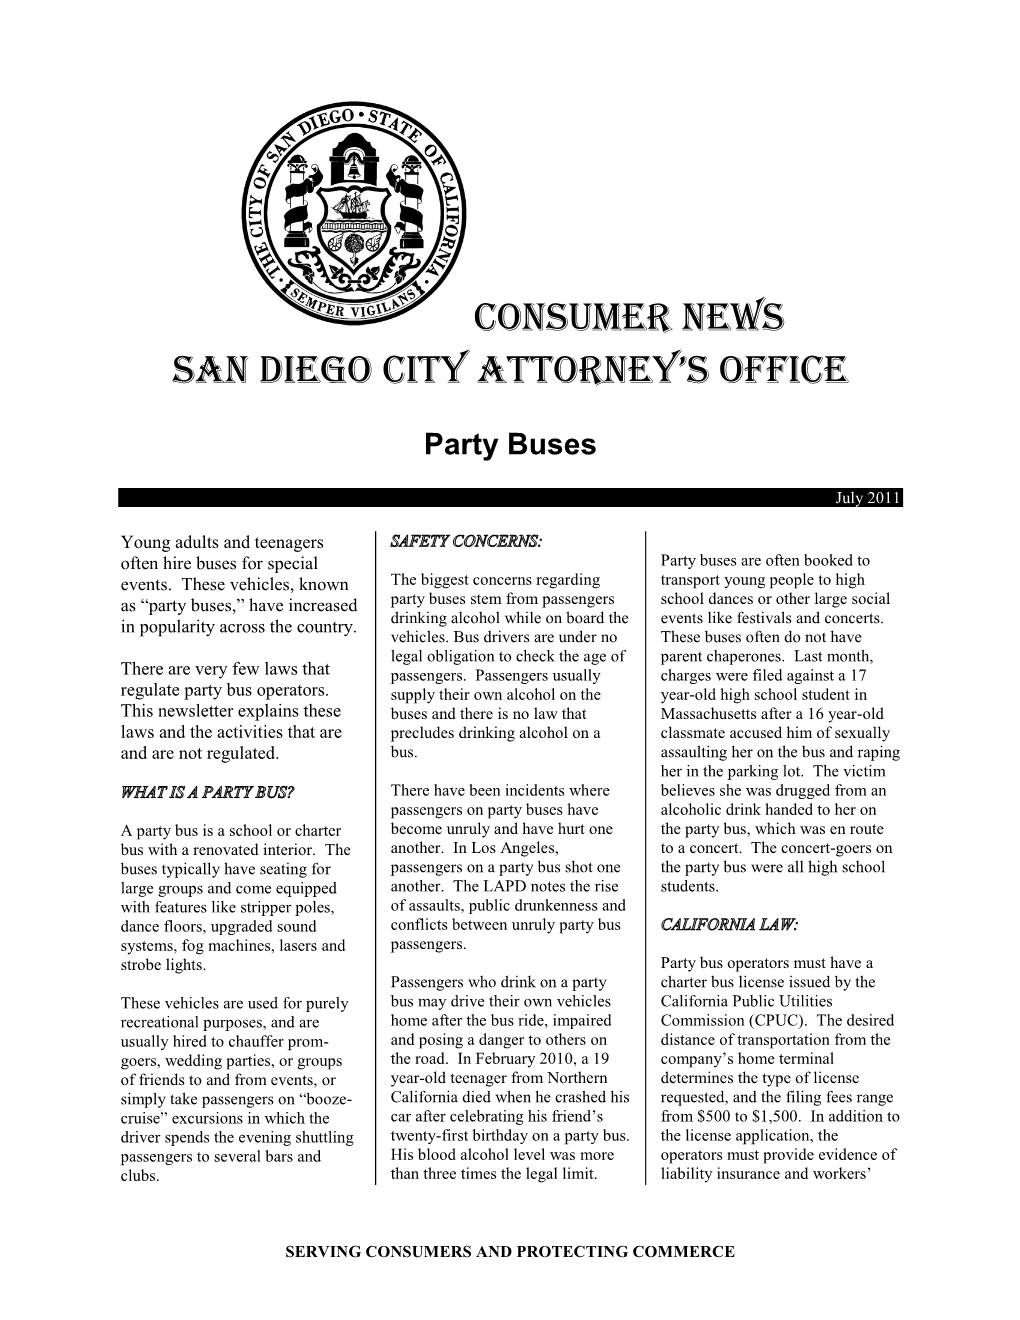 Consumer News San Diego City Attorney's Office